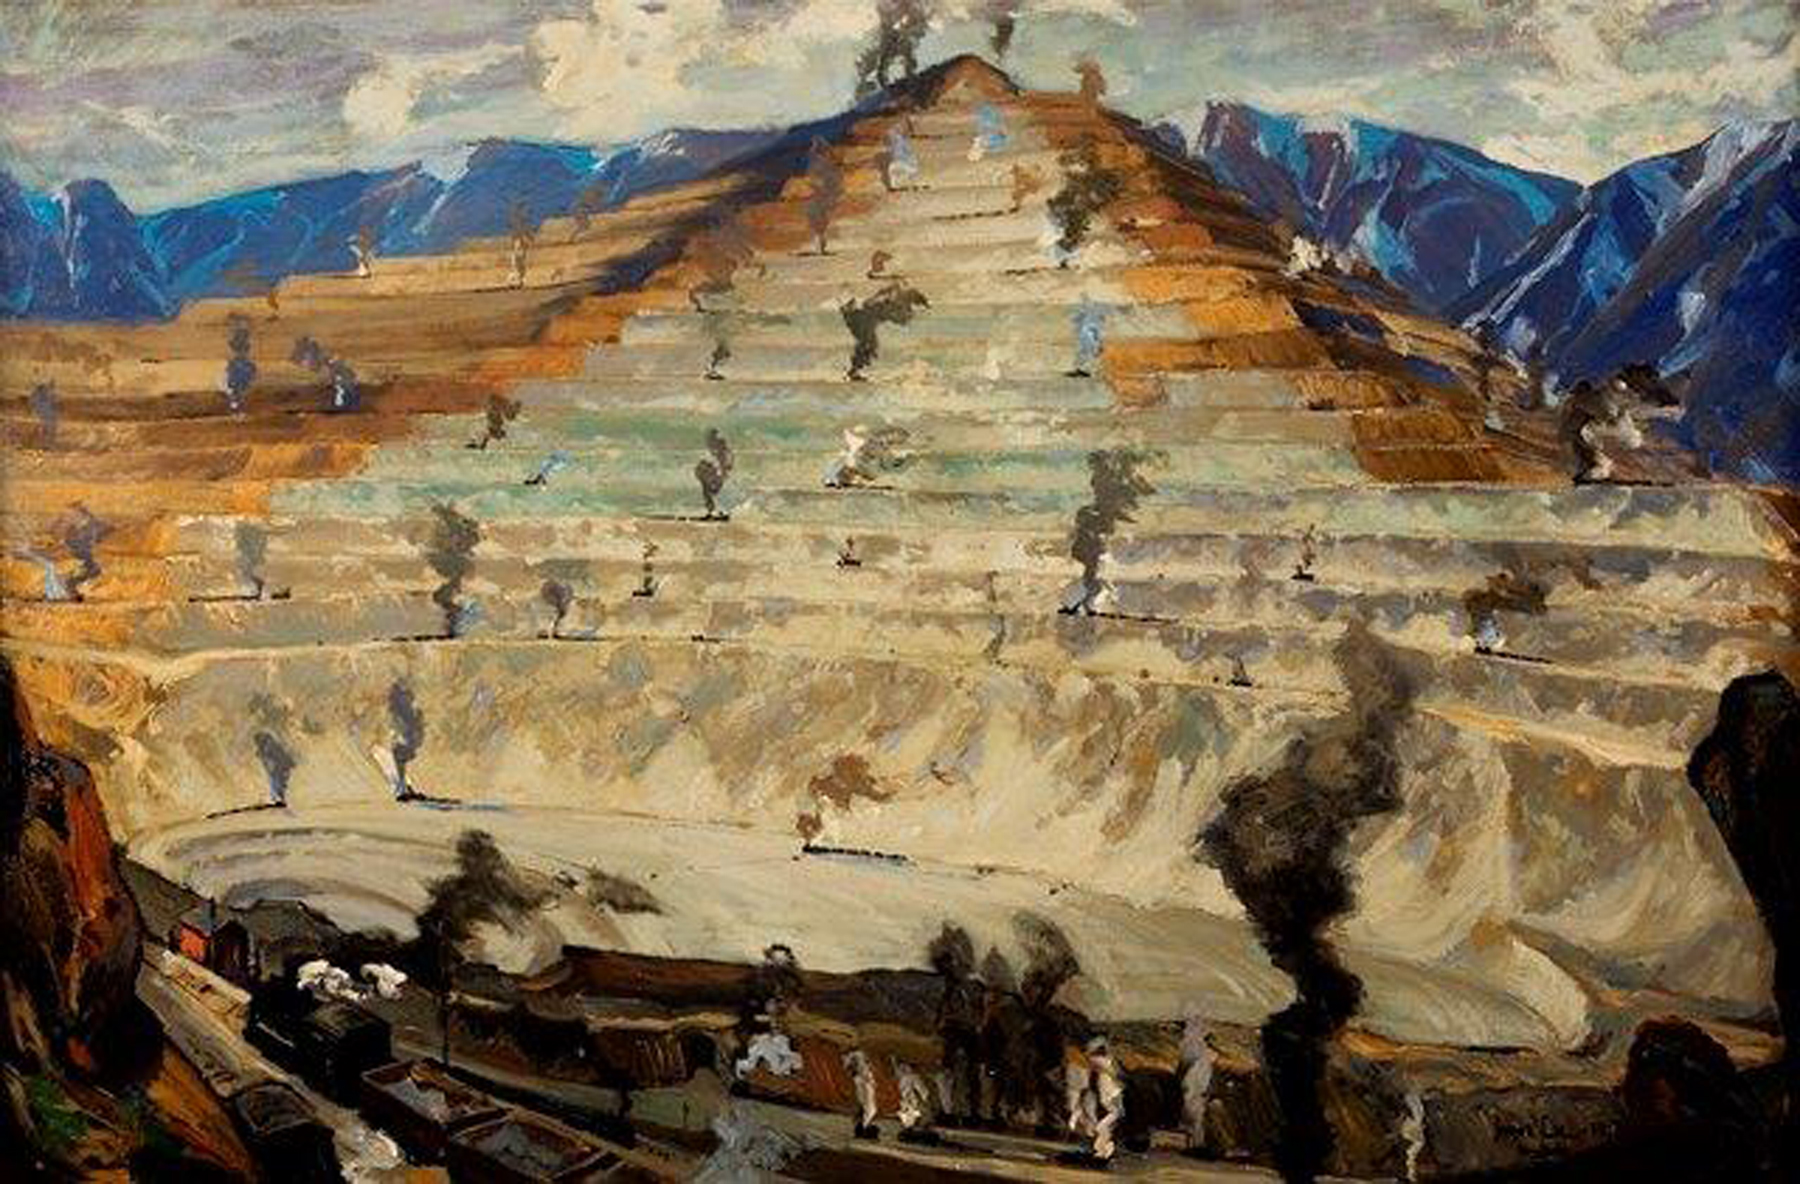 Creation and Erasure: Art of the Bingham Canyon Mine